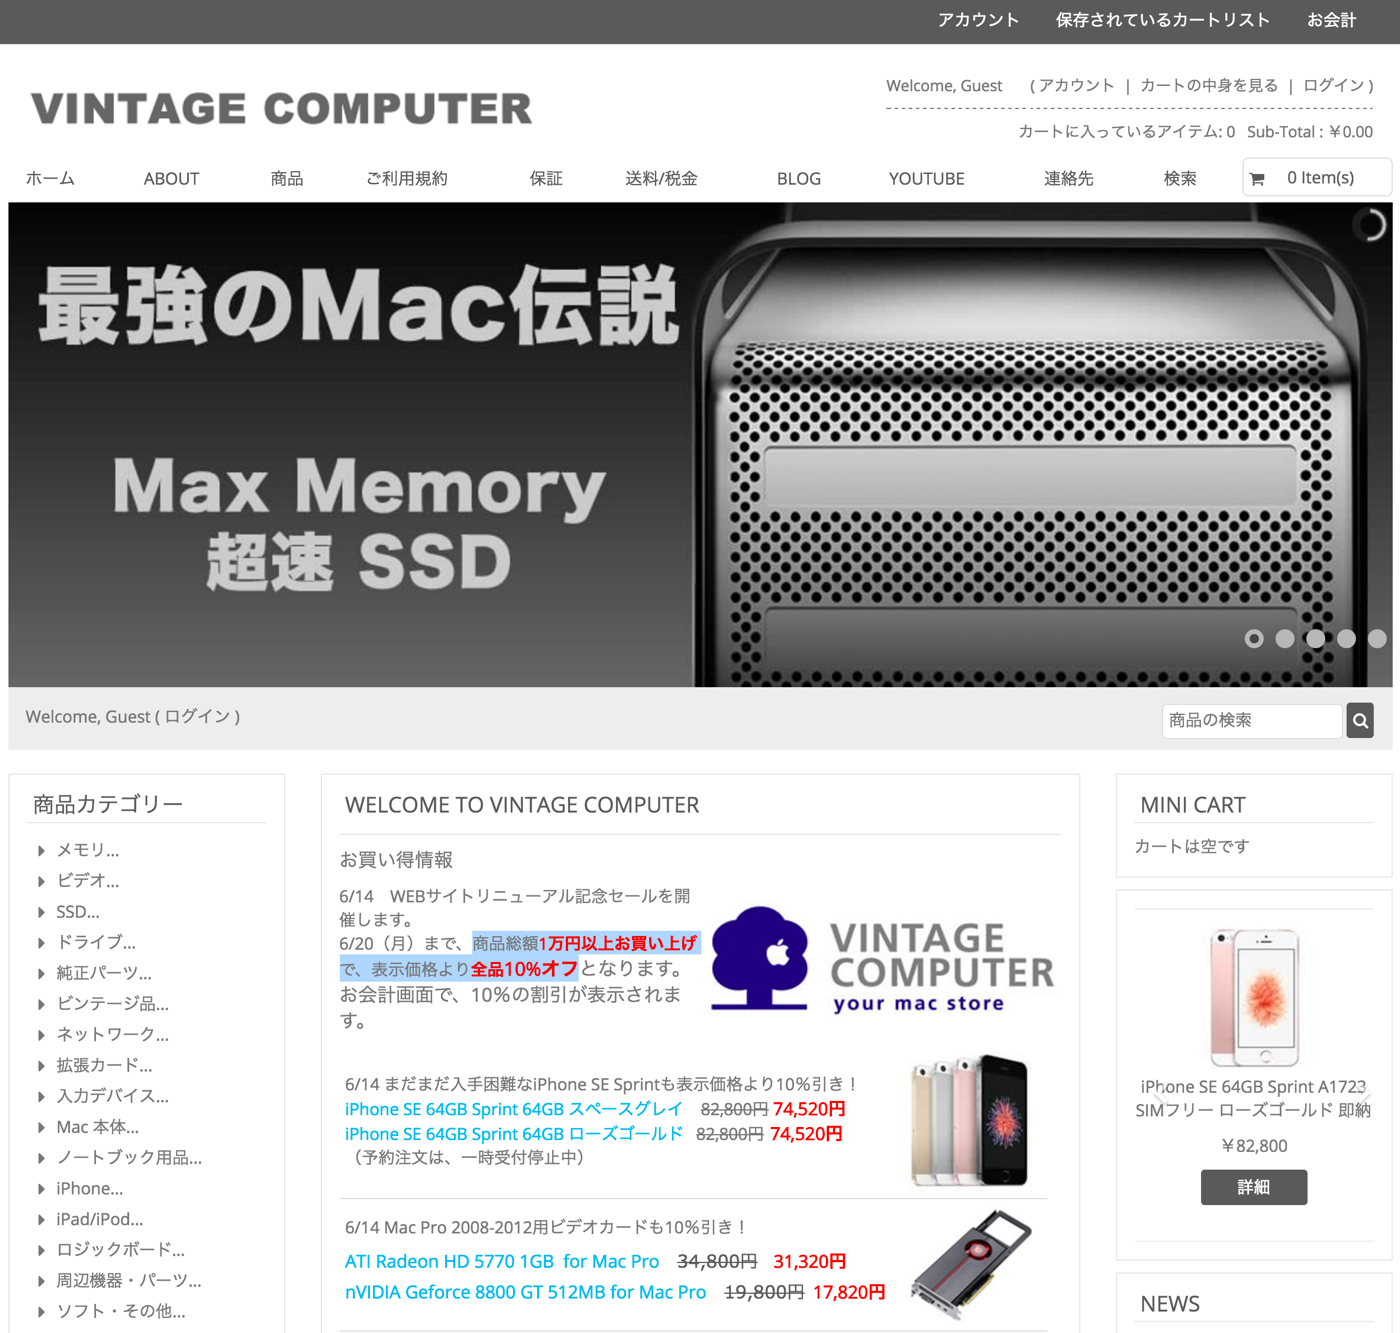 Vintage Computer、｢WEBサイトリニューアル記念セール｣を開催中 − 1万円以上購入で全品10%オフ